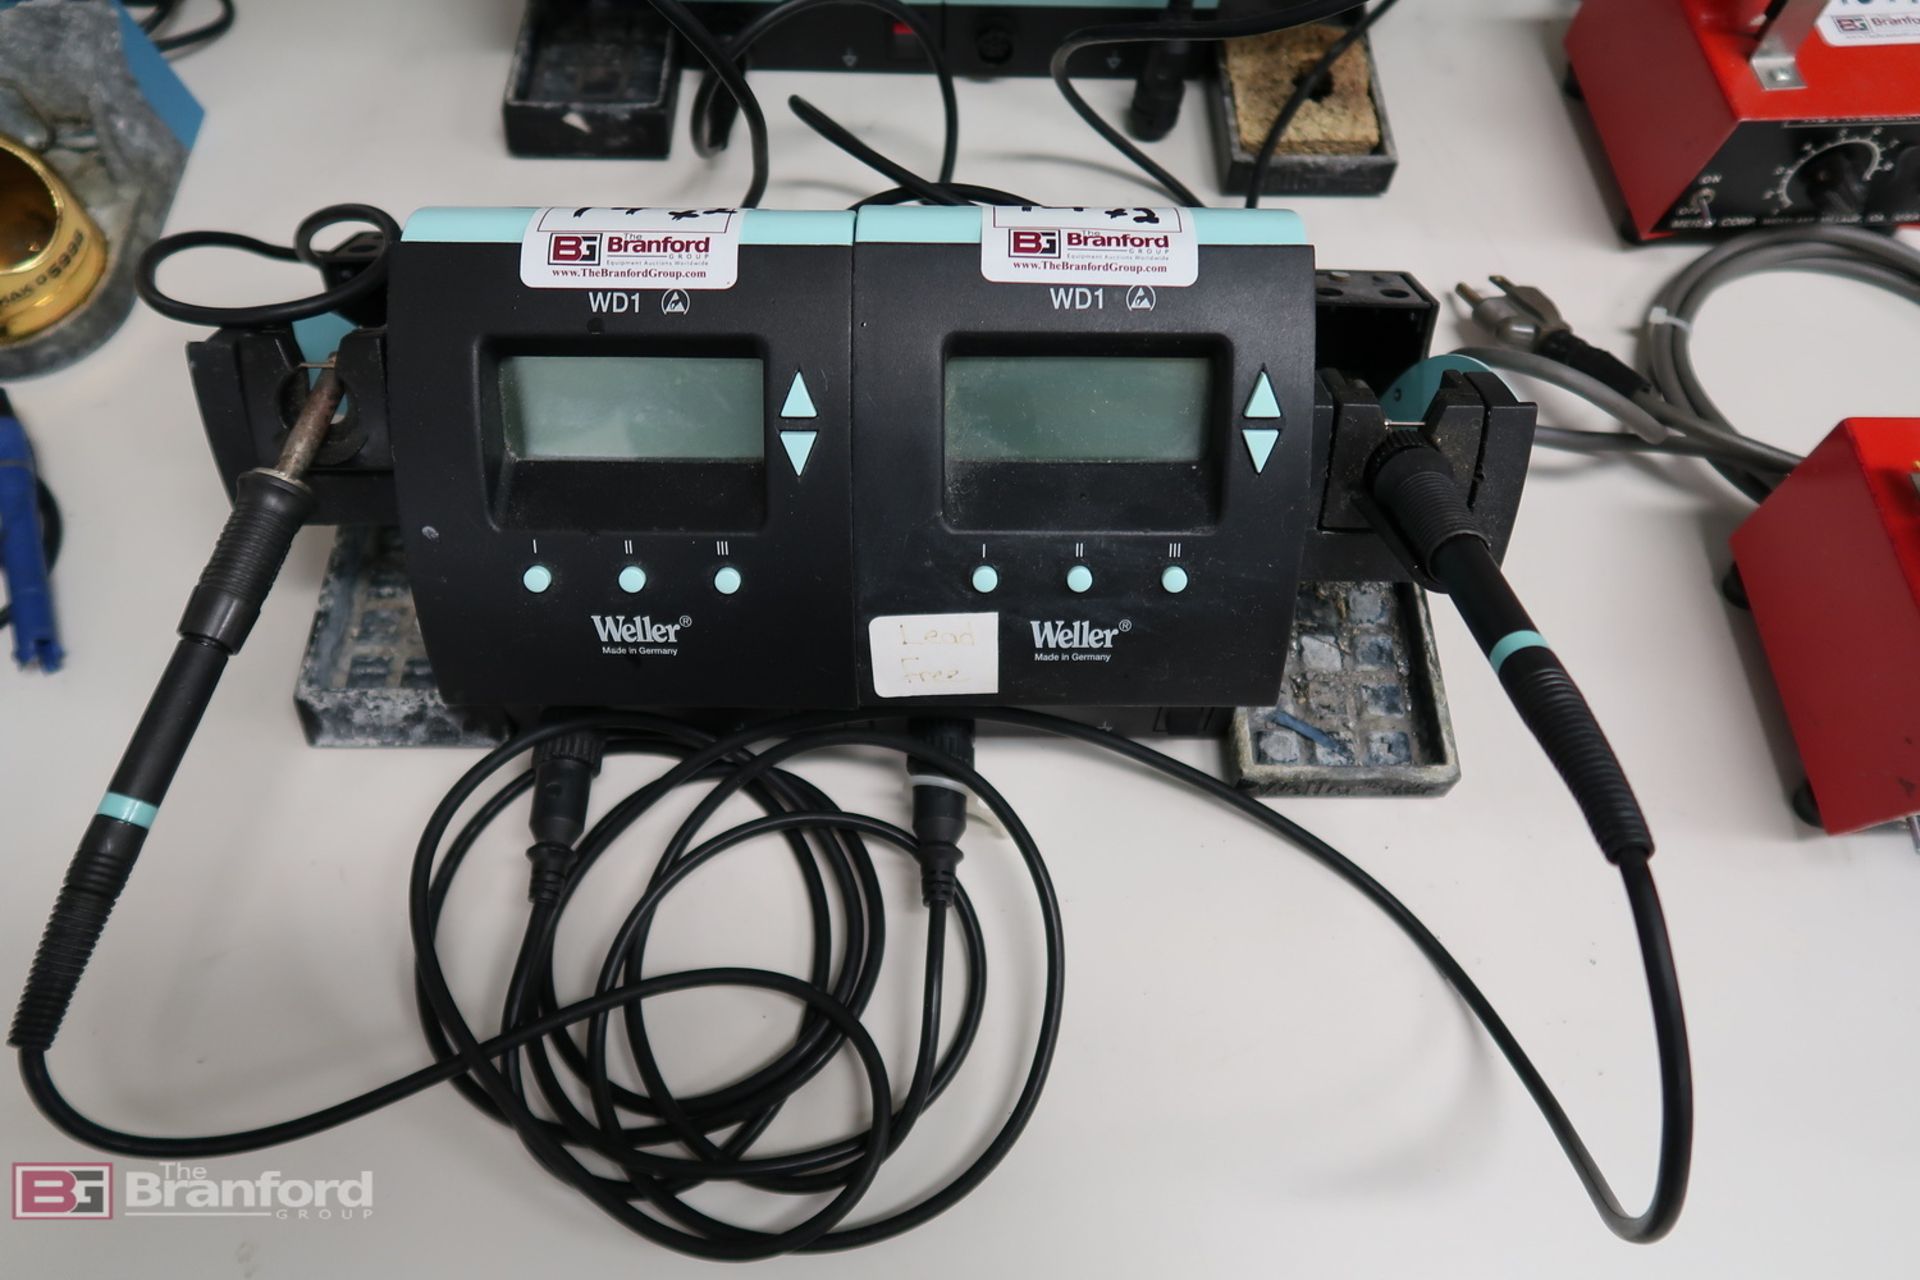 (2) Weller WD1 soldering stations